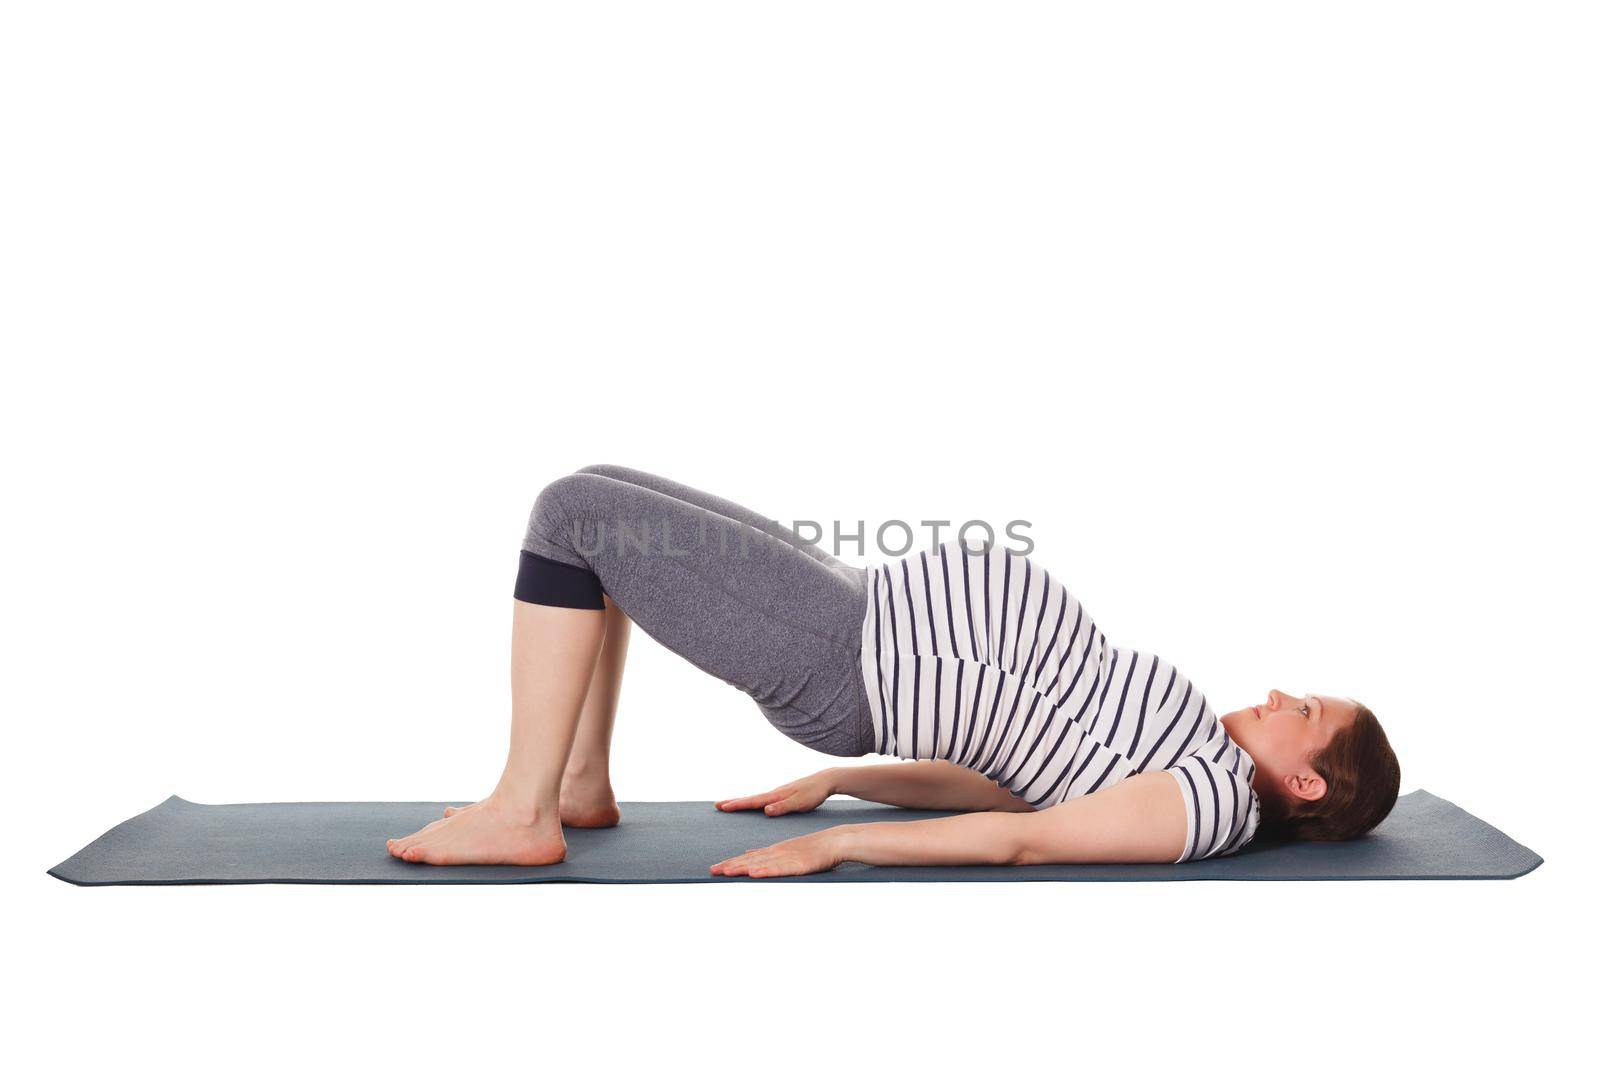 Pregnant woman doing yoga asana Purvottanasana by dimol